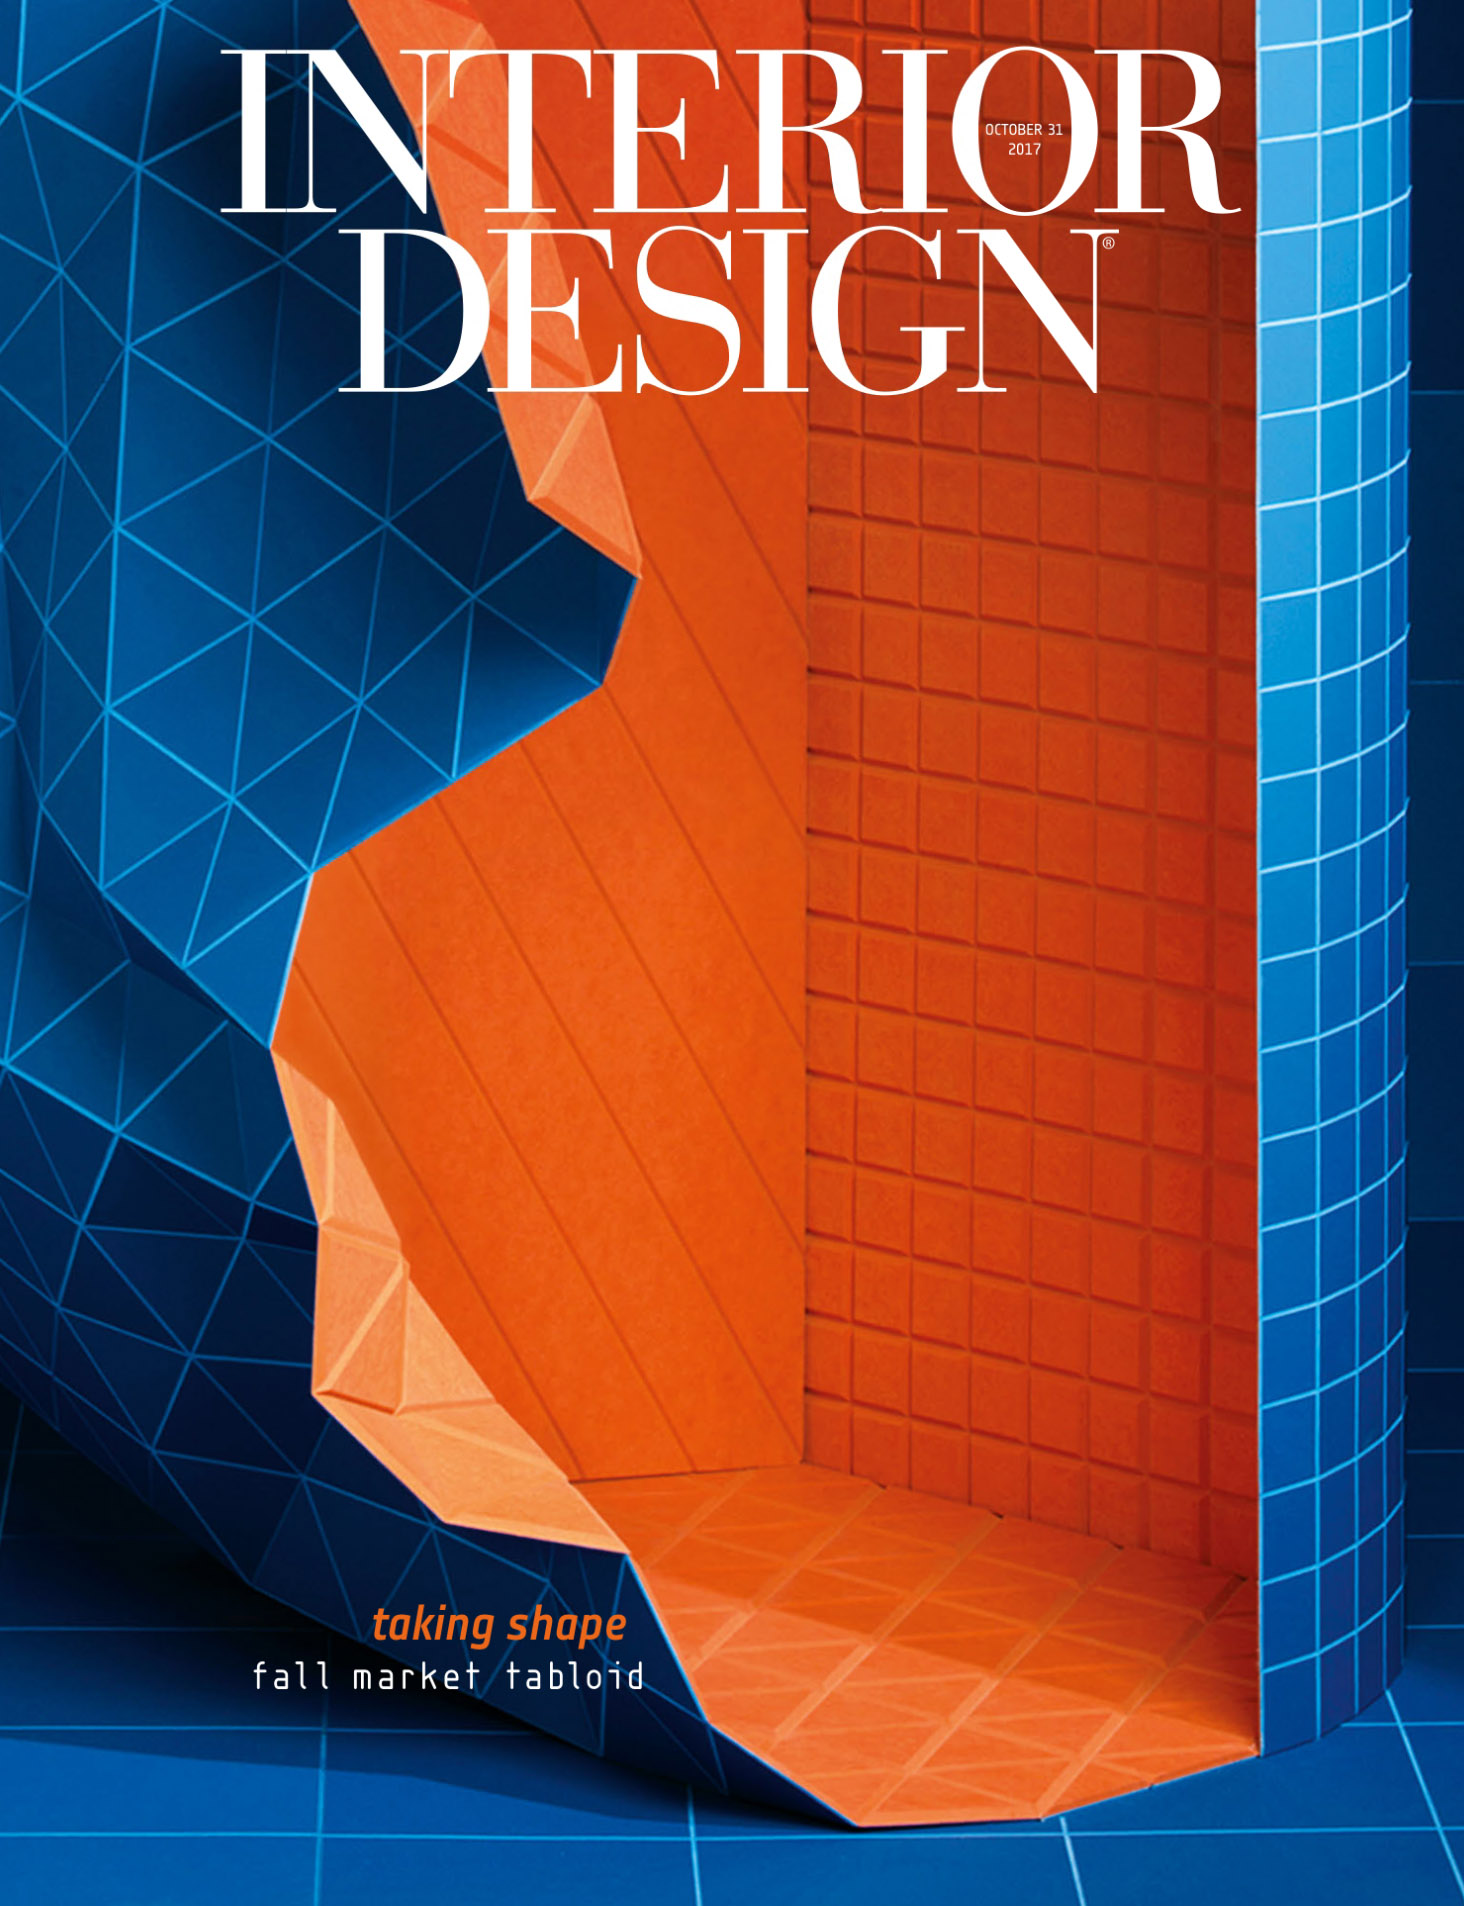 Interior Design USA October 2017